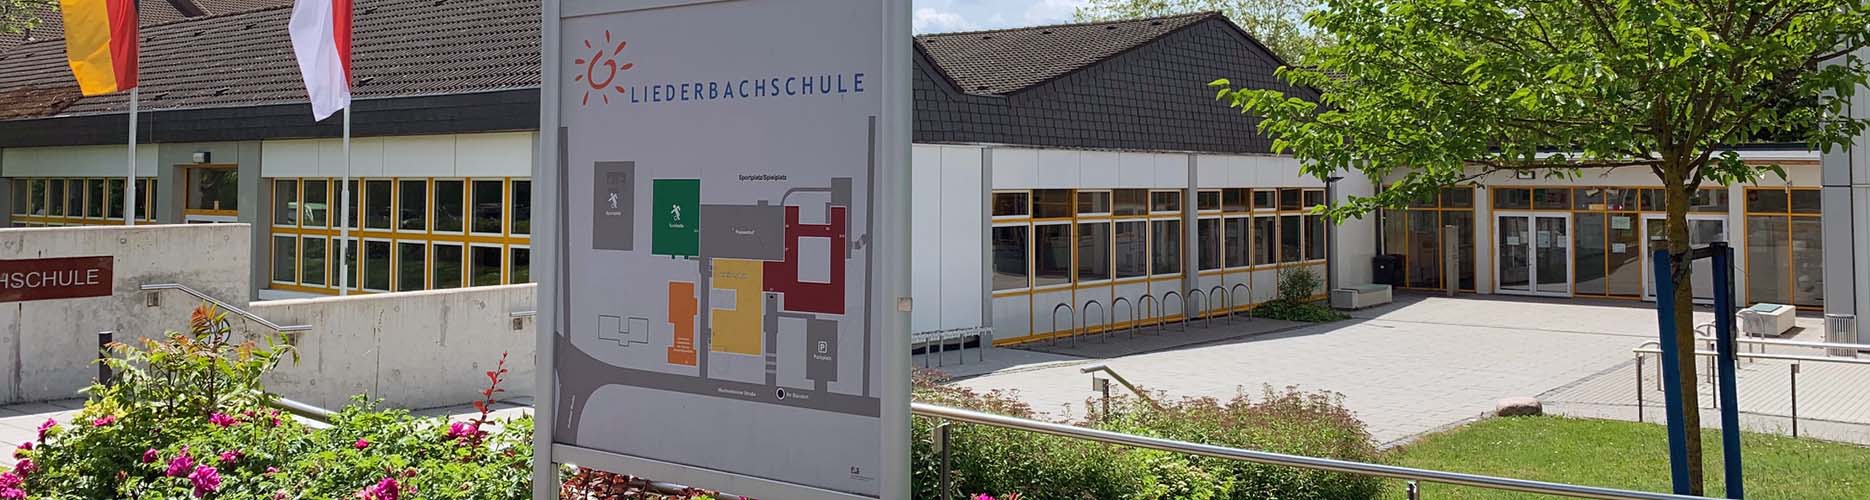 Liederbachschule